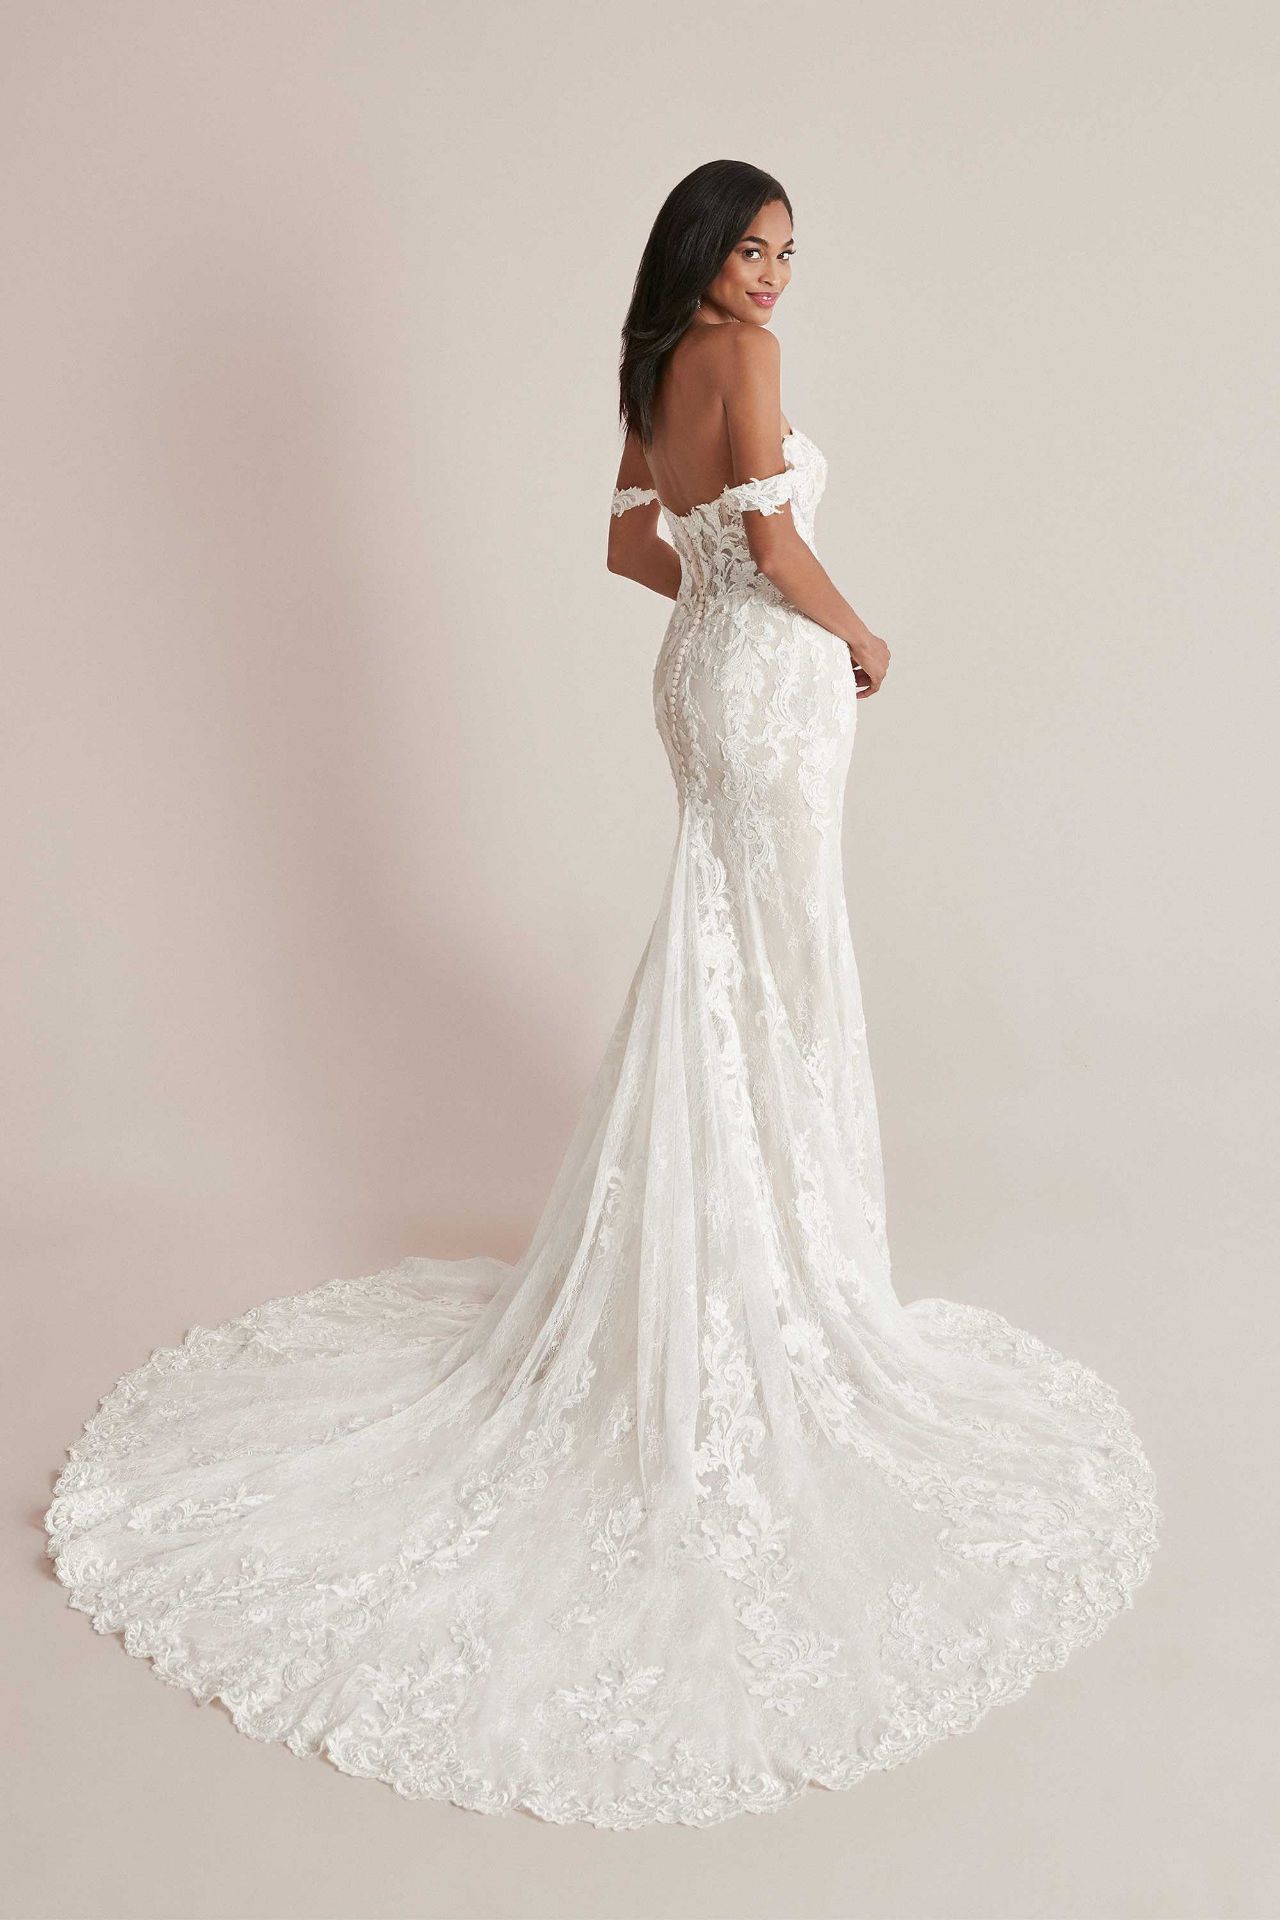 1 x Justin Alexander 'Caela' Off-The-Shoulder Lace Fit Wedding Dress - UK Size 10 - RRP £1,750 - Image 2 of 4